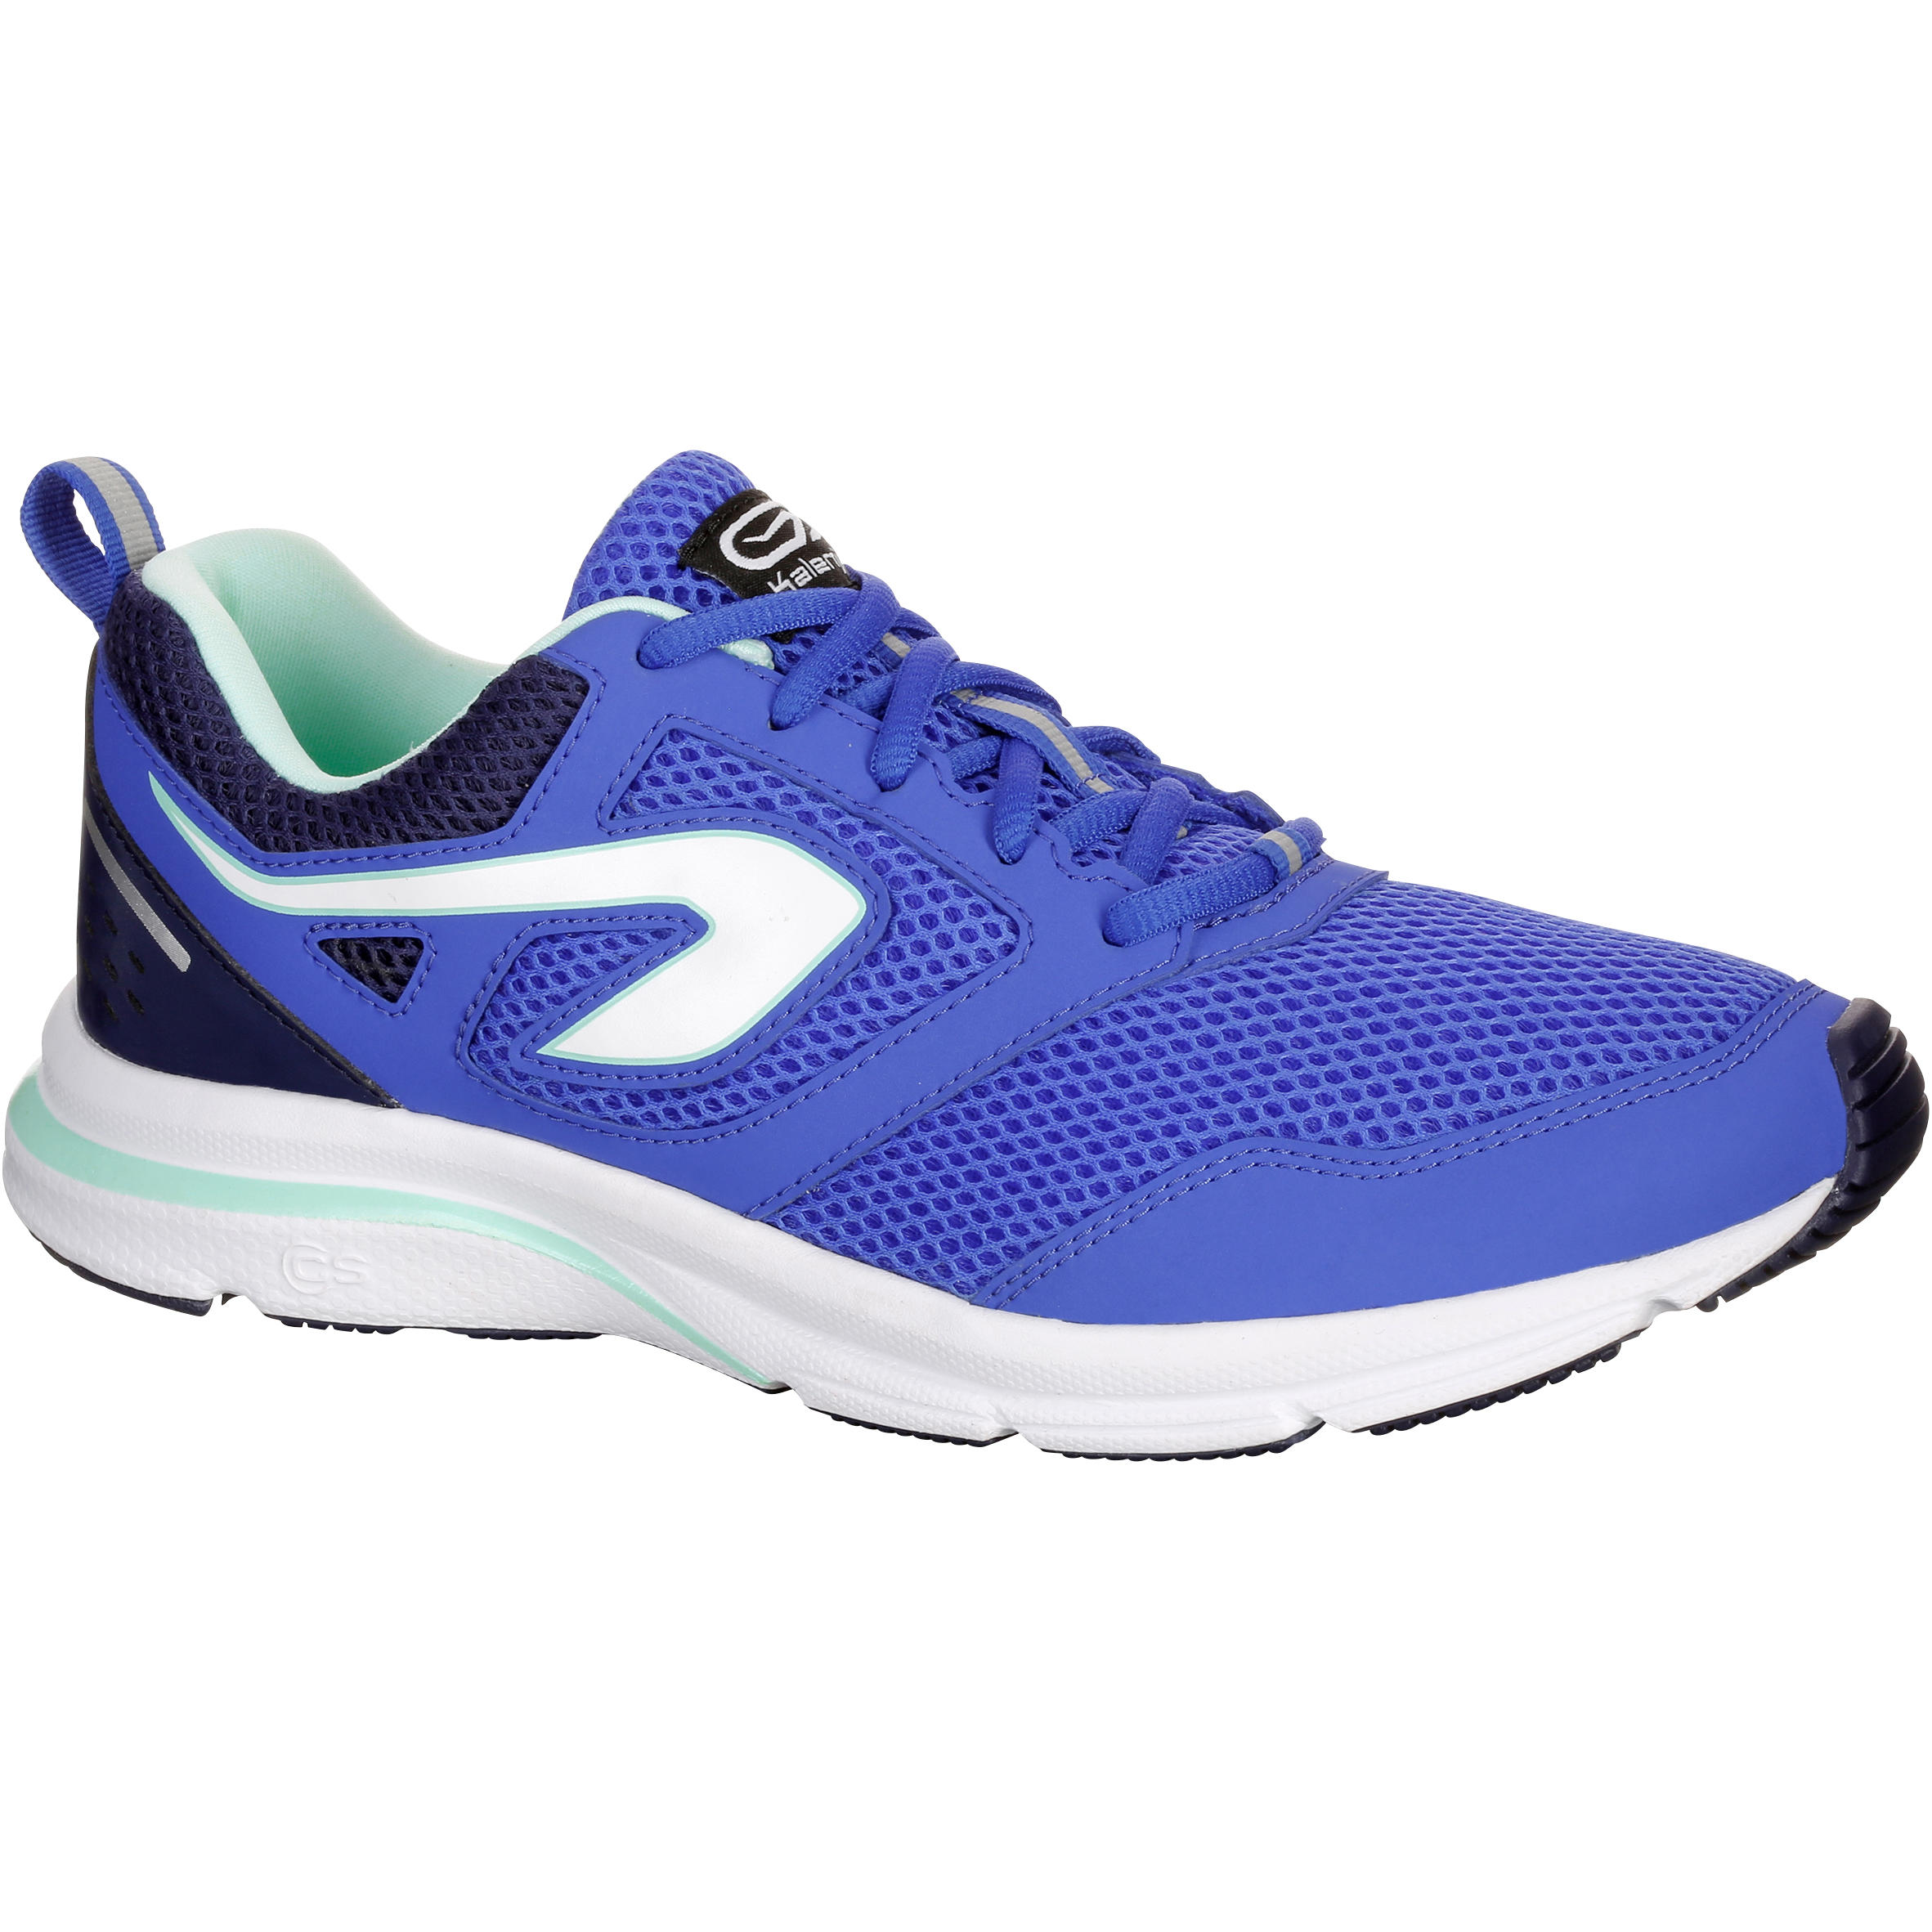 KALENJI Run Active Women's Running Shoes - Blue